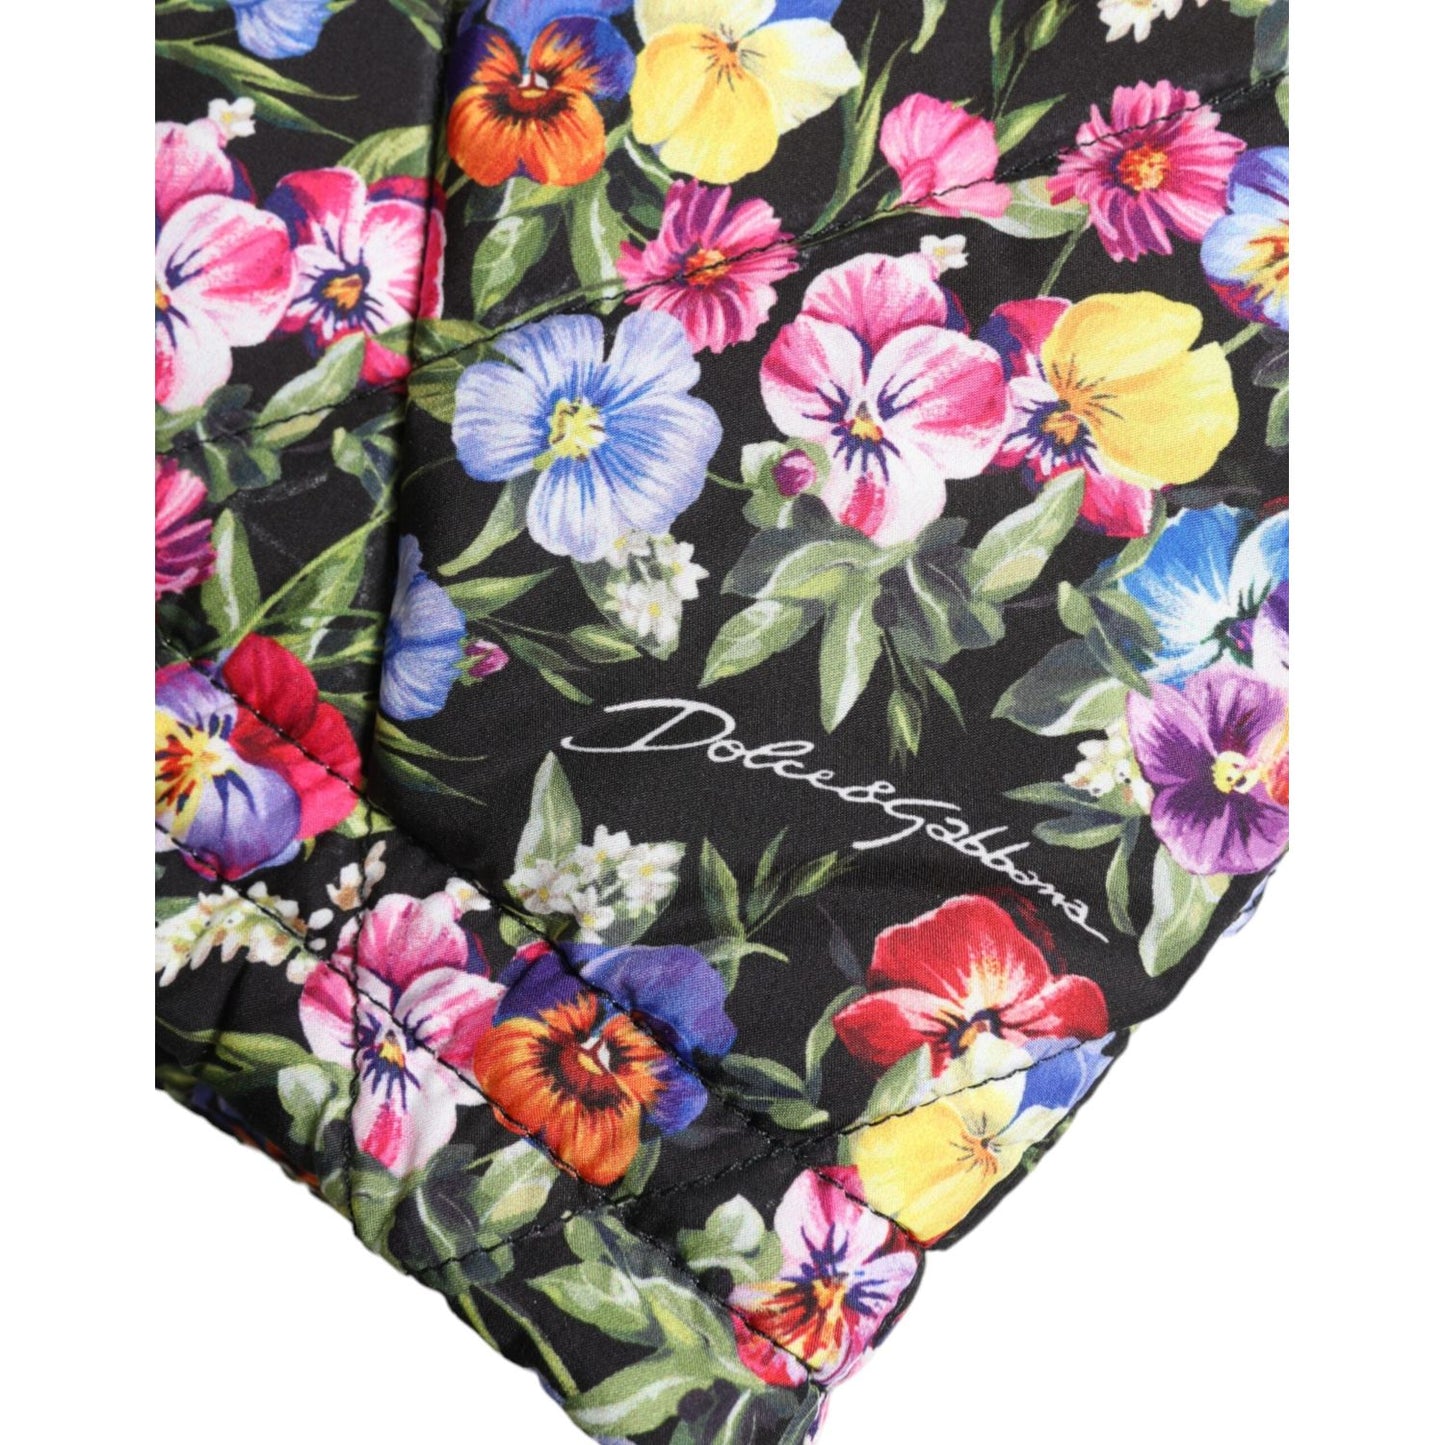 Dolce & Gabbana Vibrant High Waist Floral Shorts multicolor-floral-high-waist-hot-pants-shorts-1